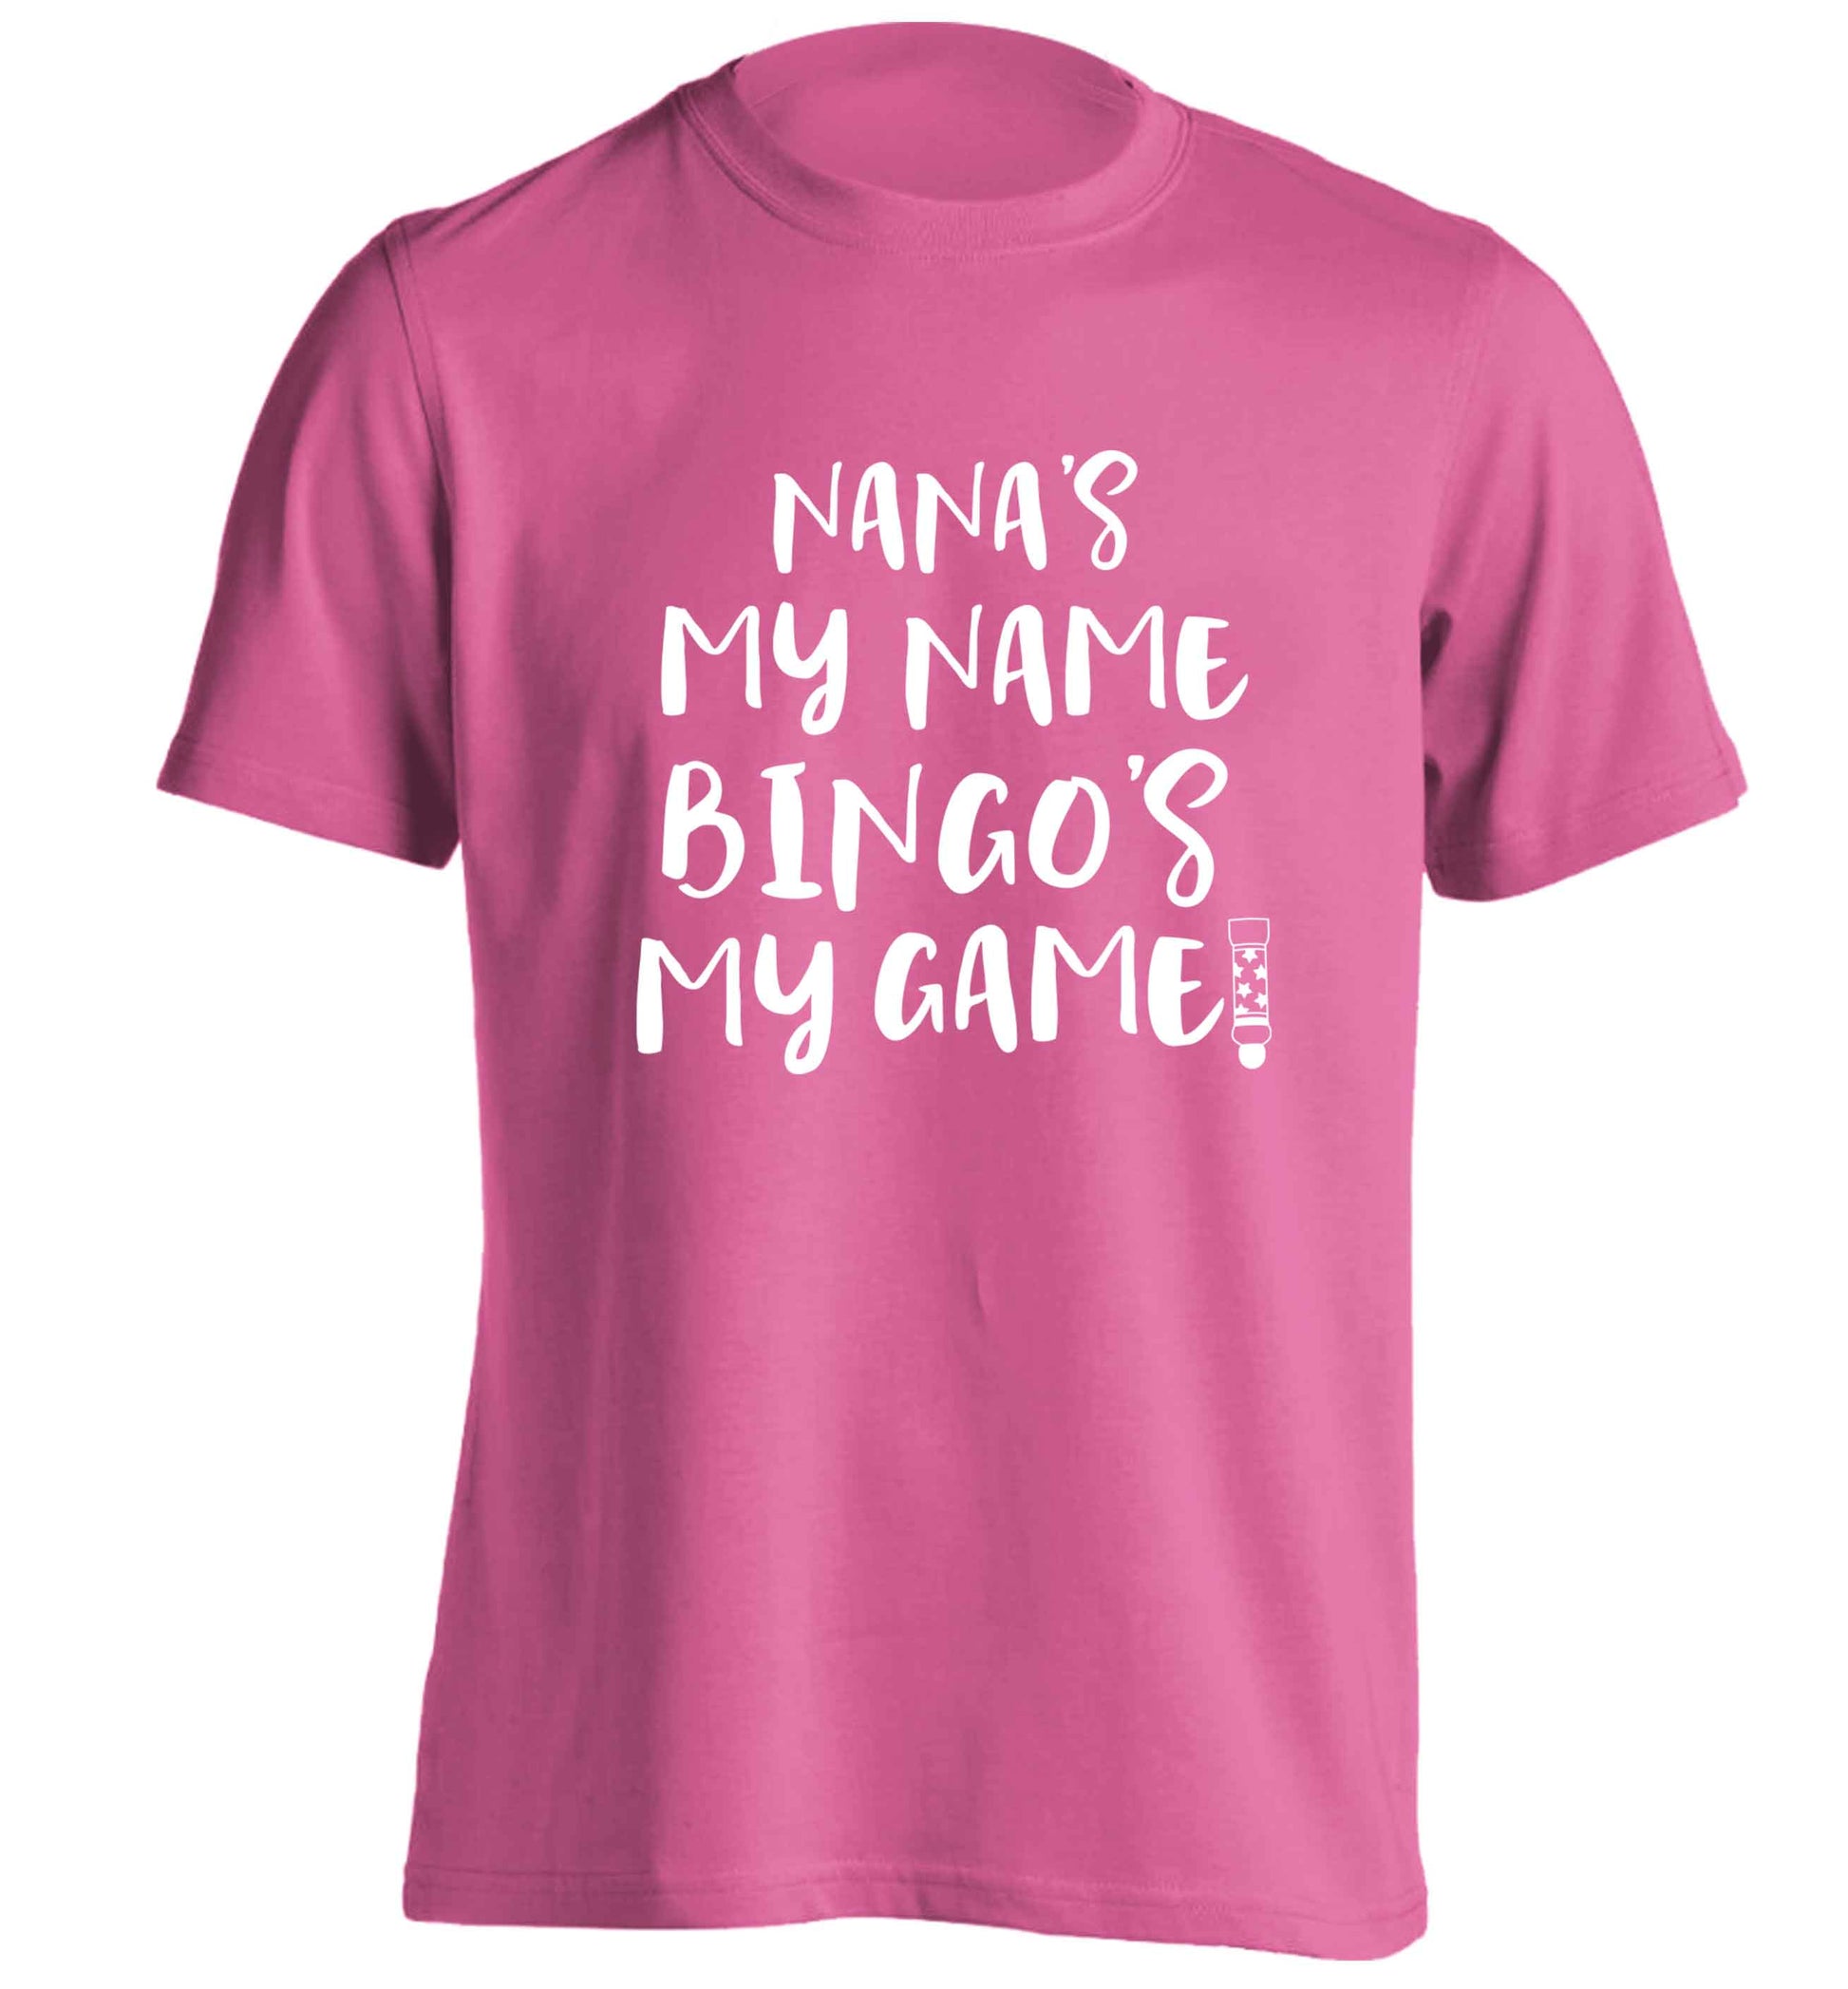 Nana's my name bingo's my game! adults unisex pink Tshirt 2XL